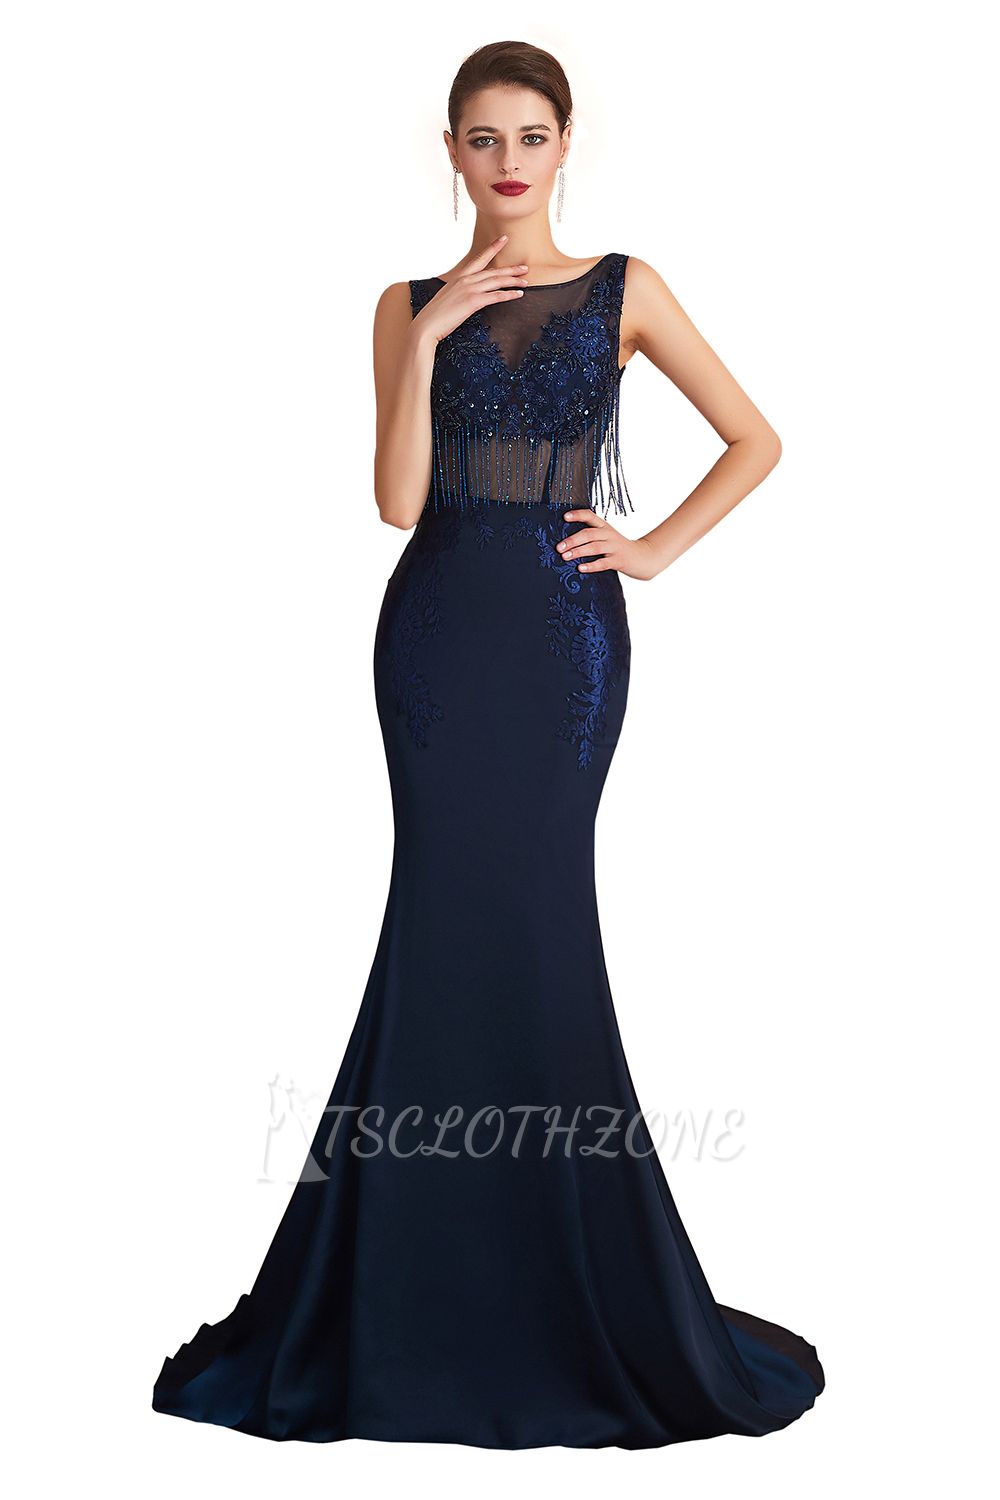 Caroline Carol | Dark Navy Tassel Sparkle Mermaid Prom Dress, Elegant Sleeveless Evening Gowns with Open Back